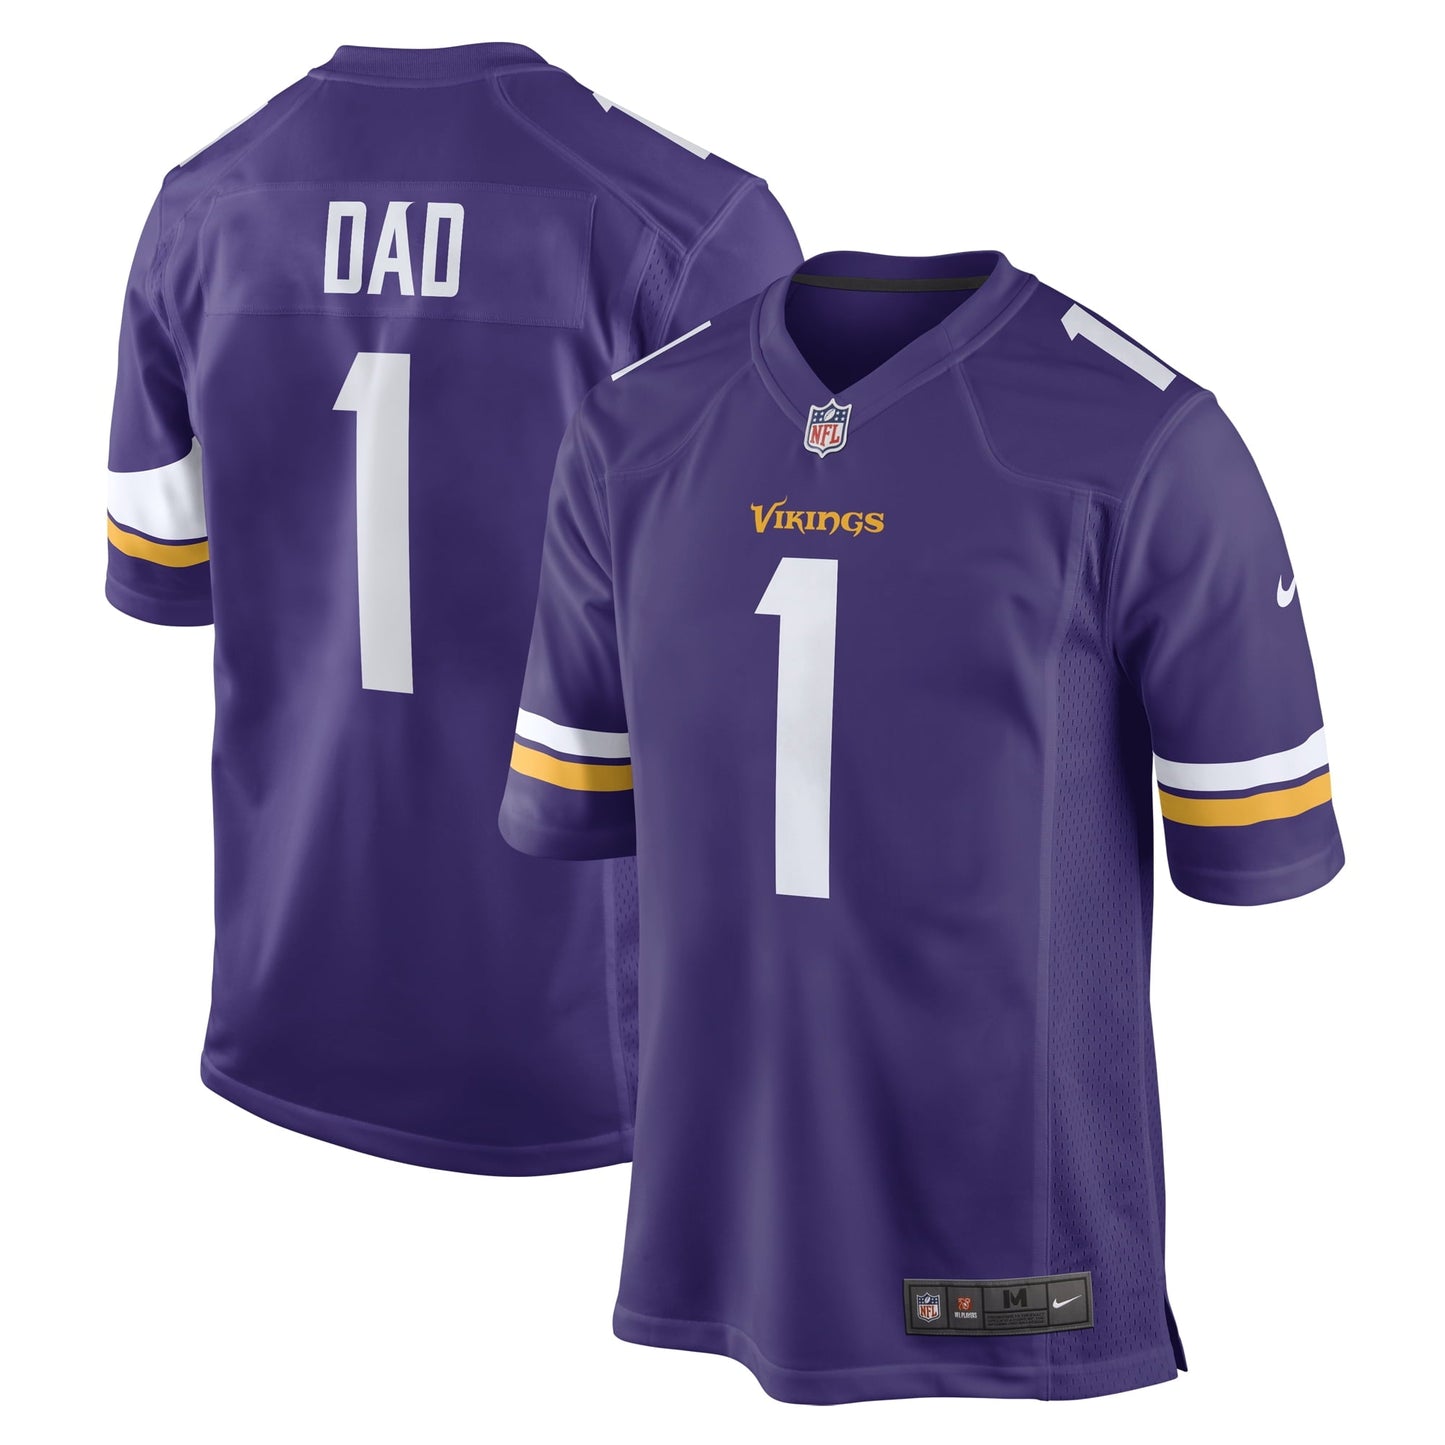 Men's Nike Number 1 Dad Purple Minnesota Vikings Game Jersey